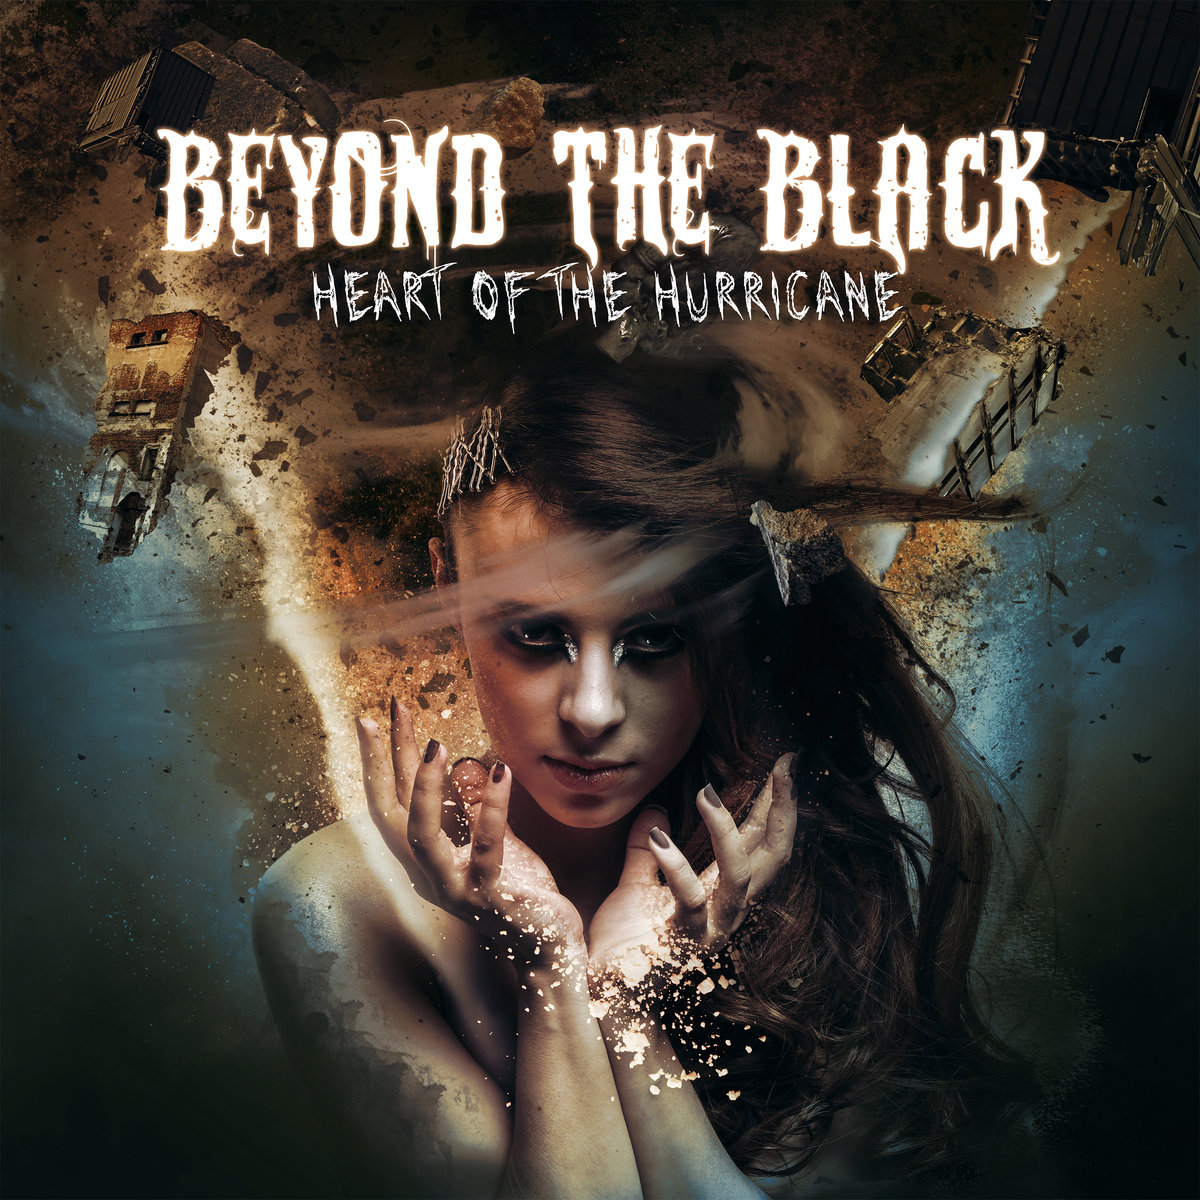 beyond_the_black_heart_of_the_hurricane_2018_album_front_cover_lemez_borito.jpg